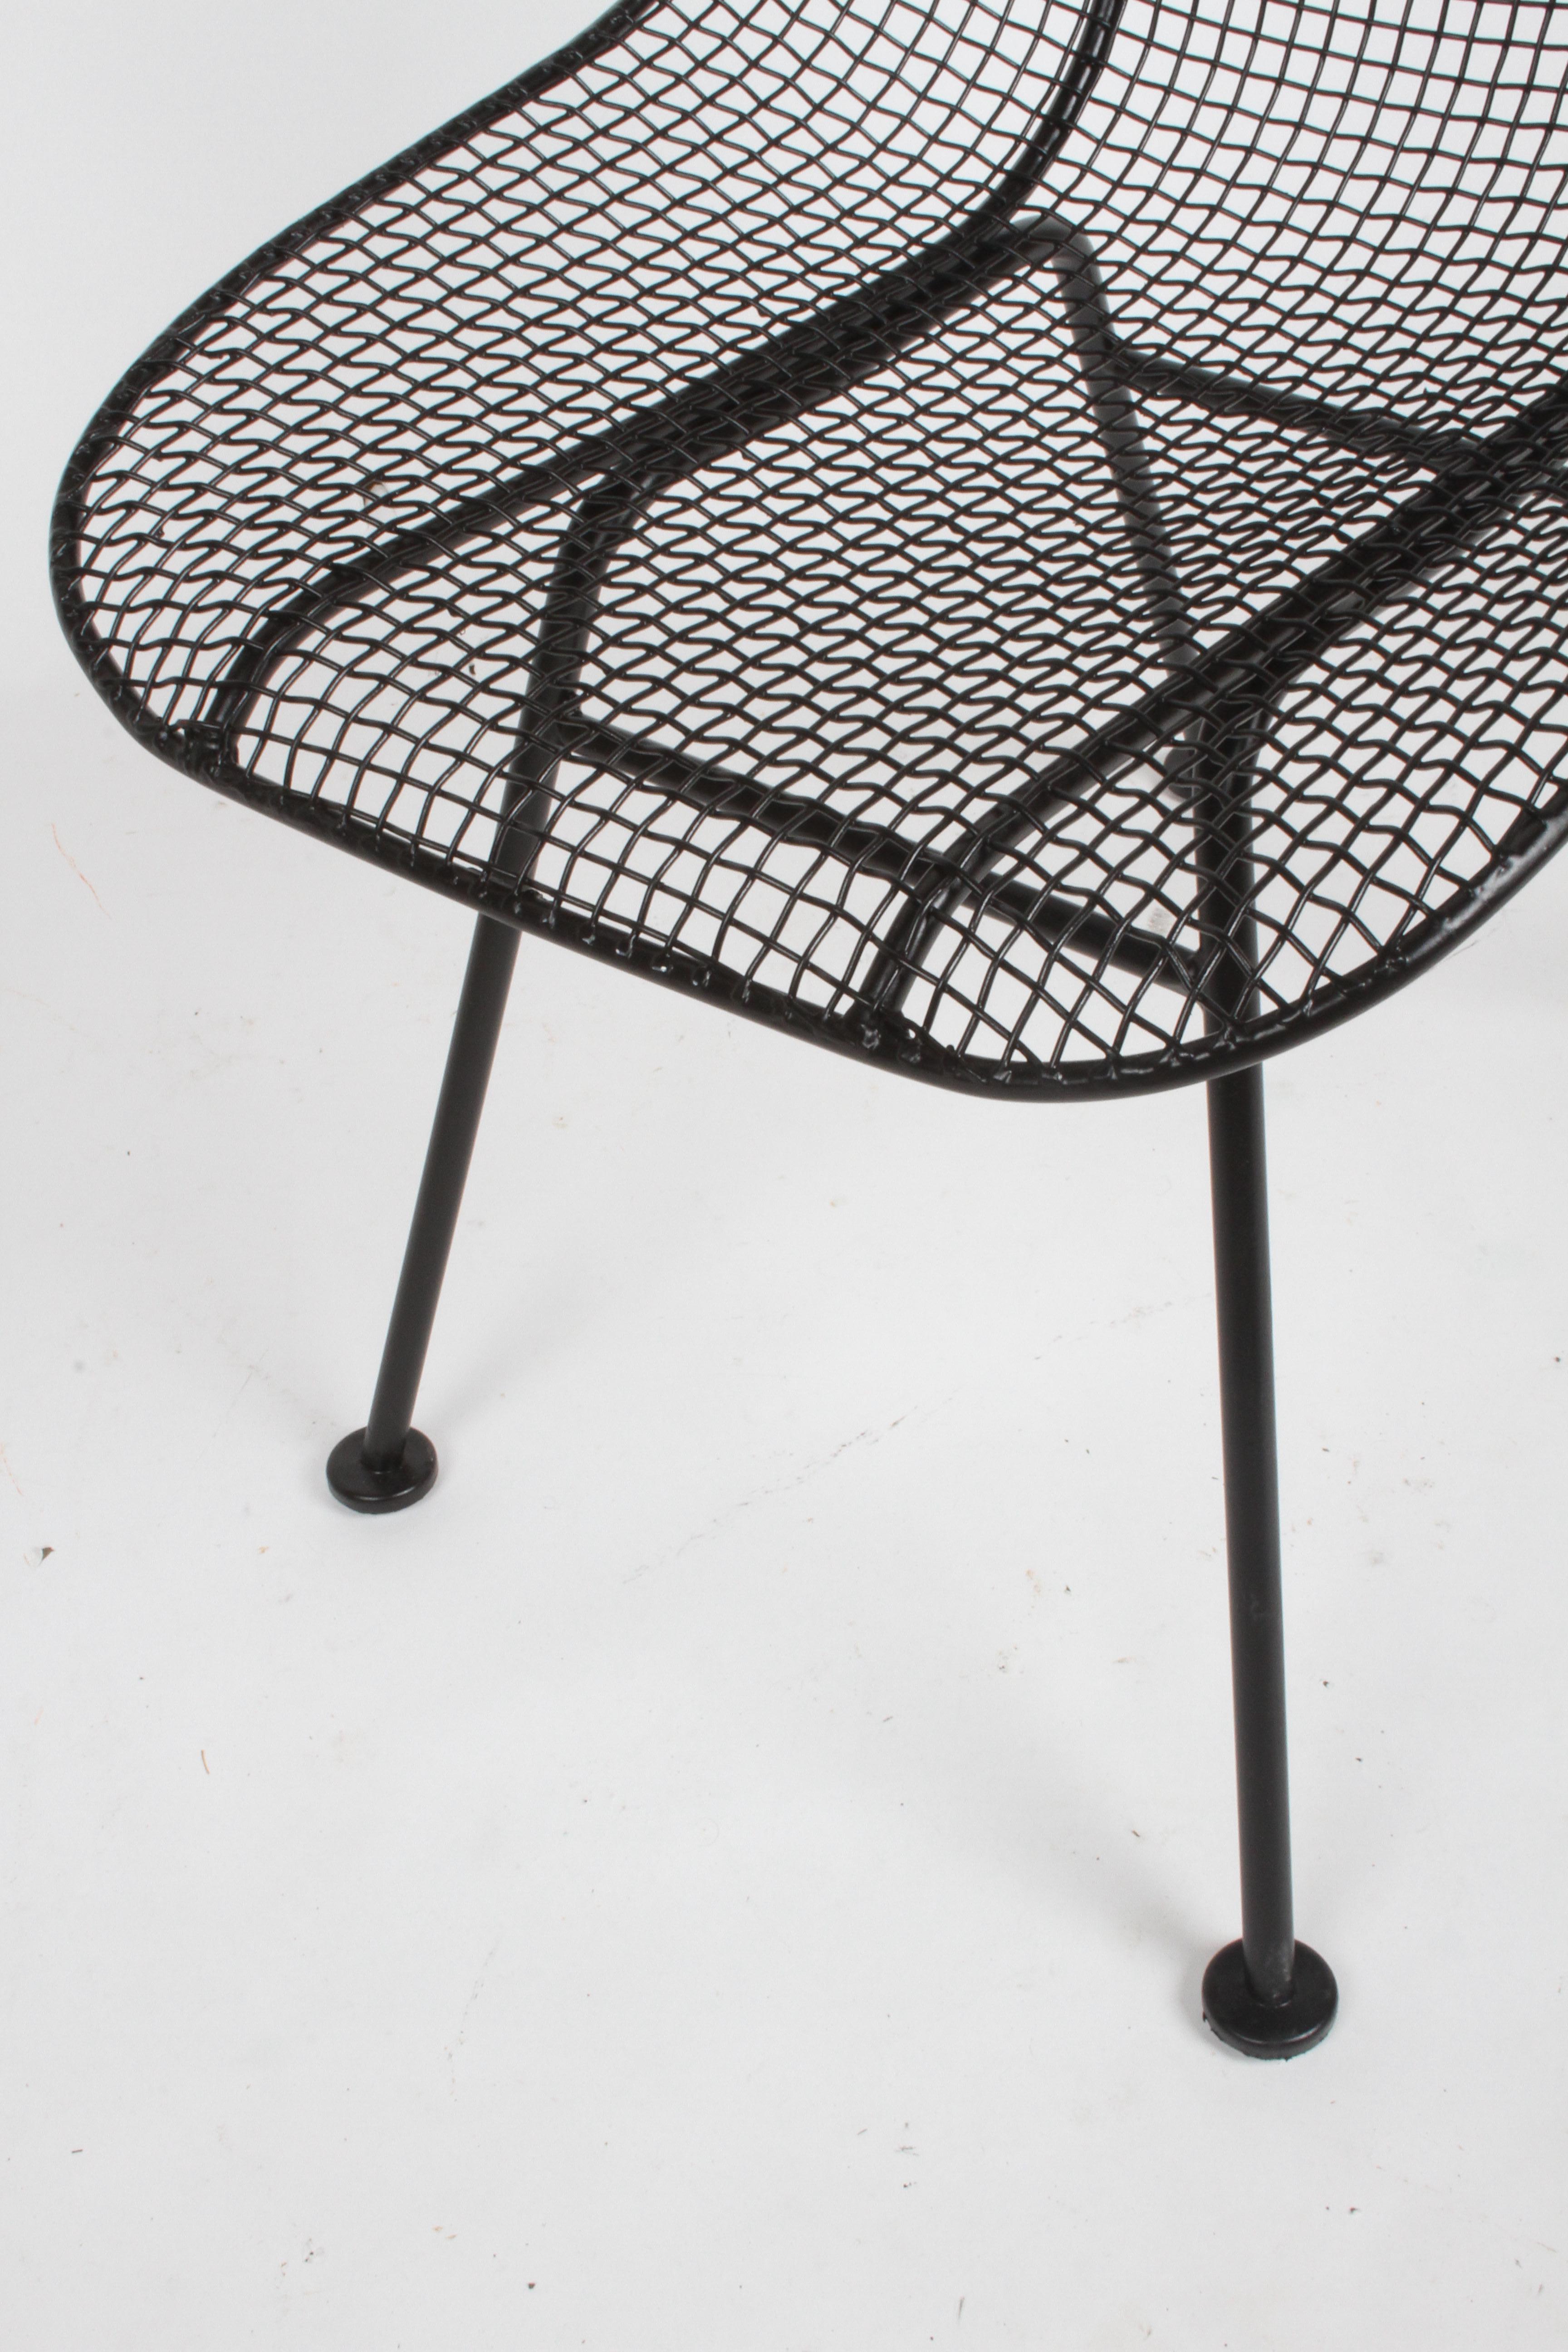 Satin Black Russell Woodard Sculptura Mesh Dining Side Chairs, Newly Restored  3